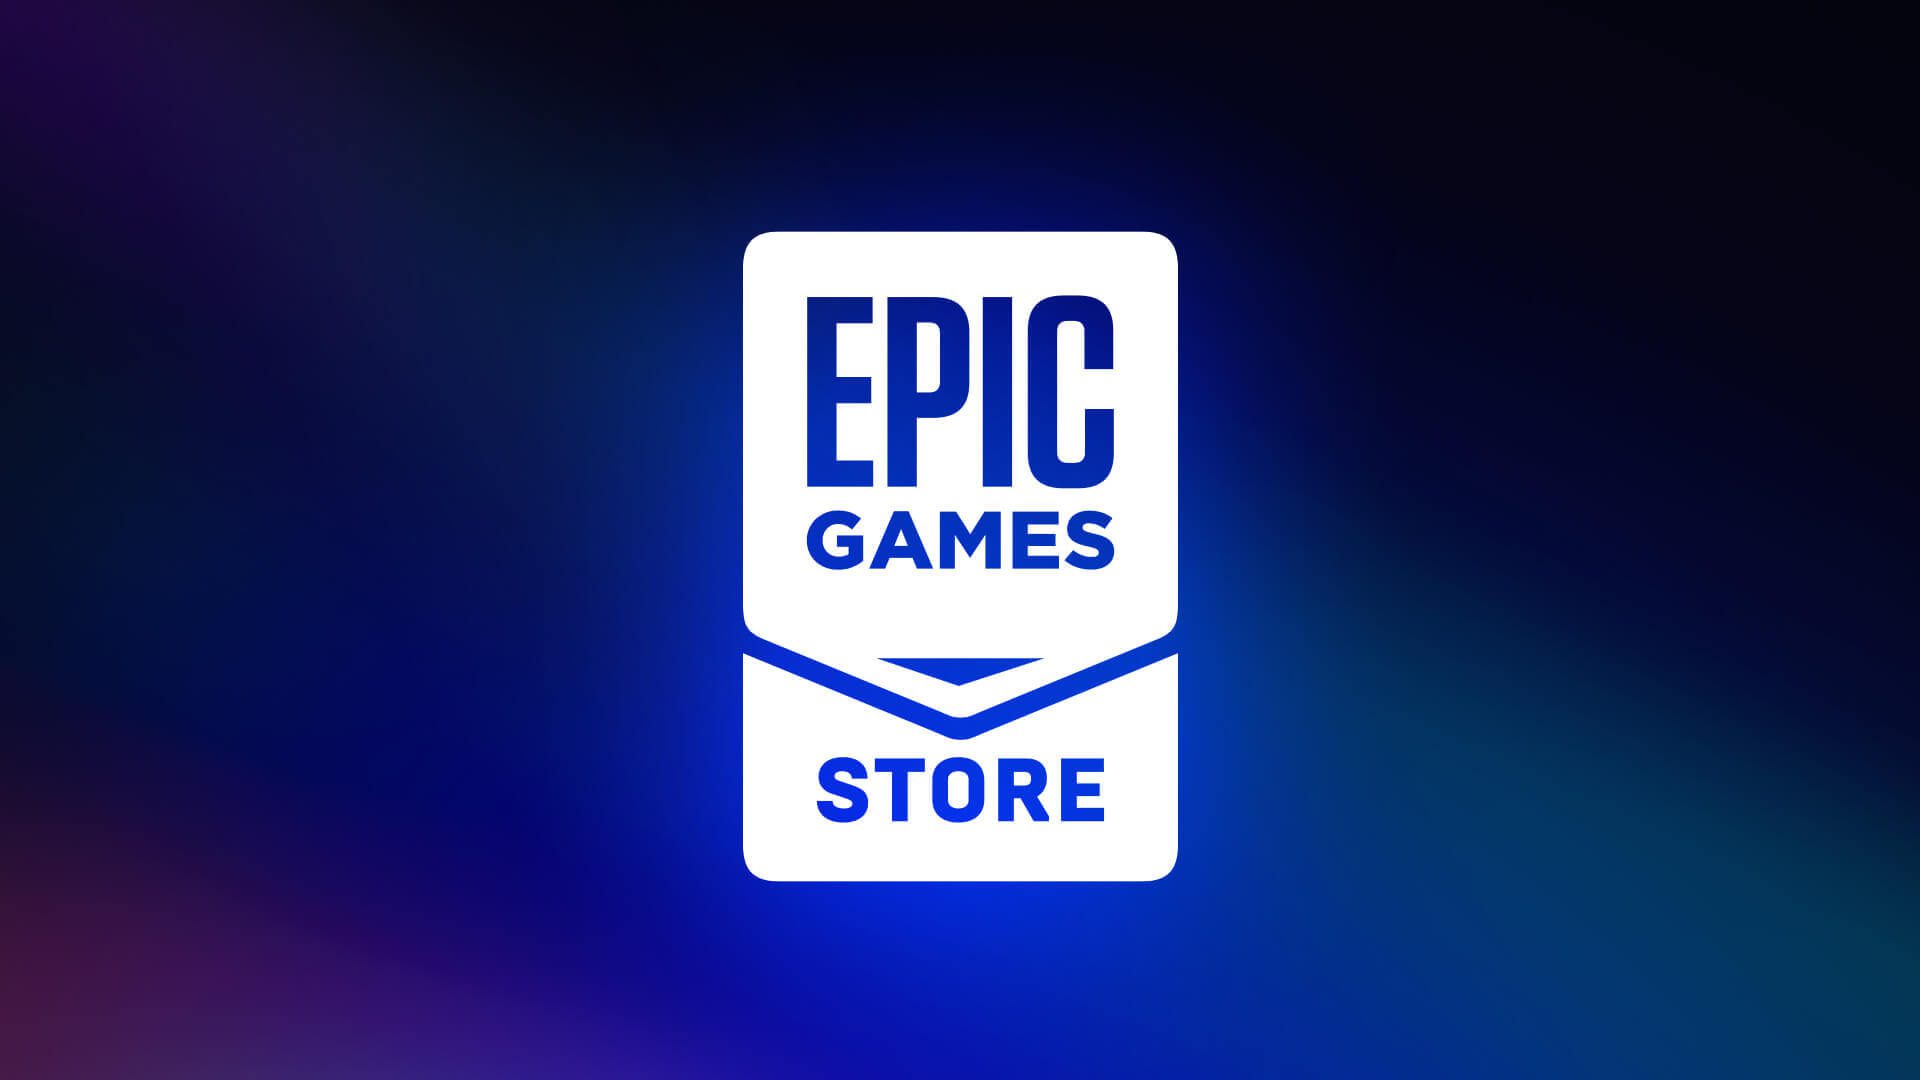 Riot Games brings League of Legends, VALORANT, and more to the Epic Games  Store - Epic Games Store